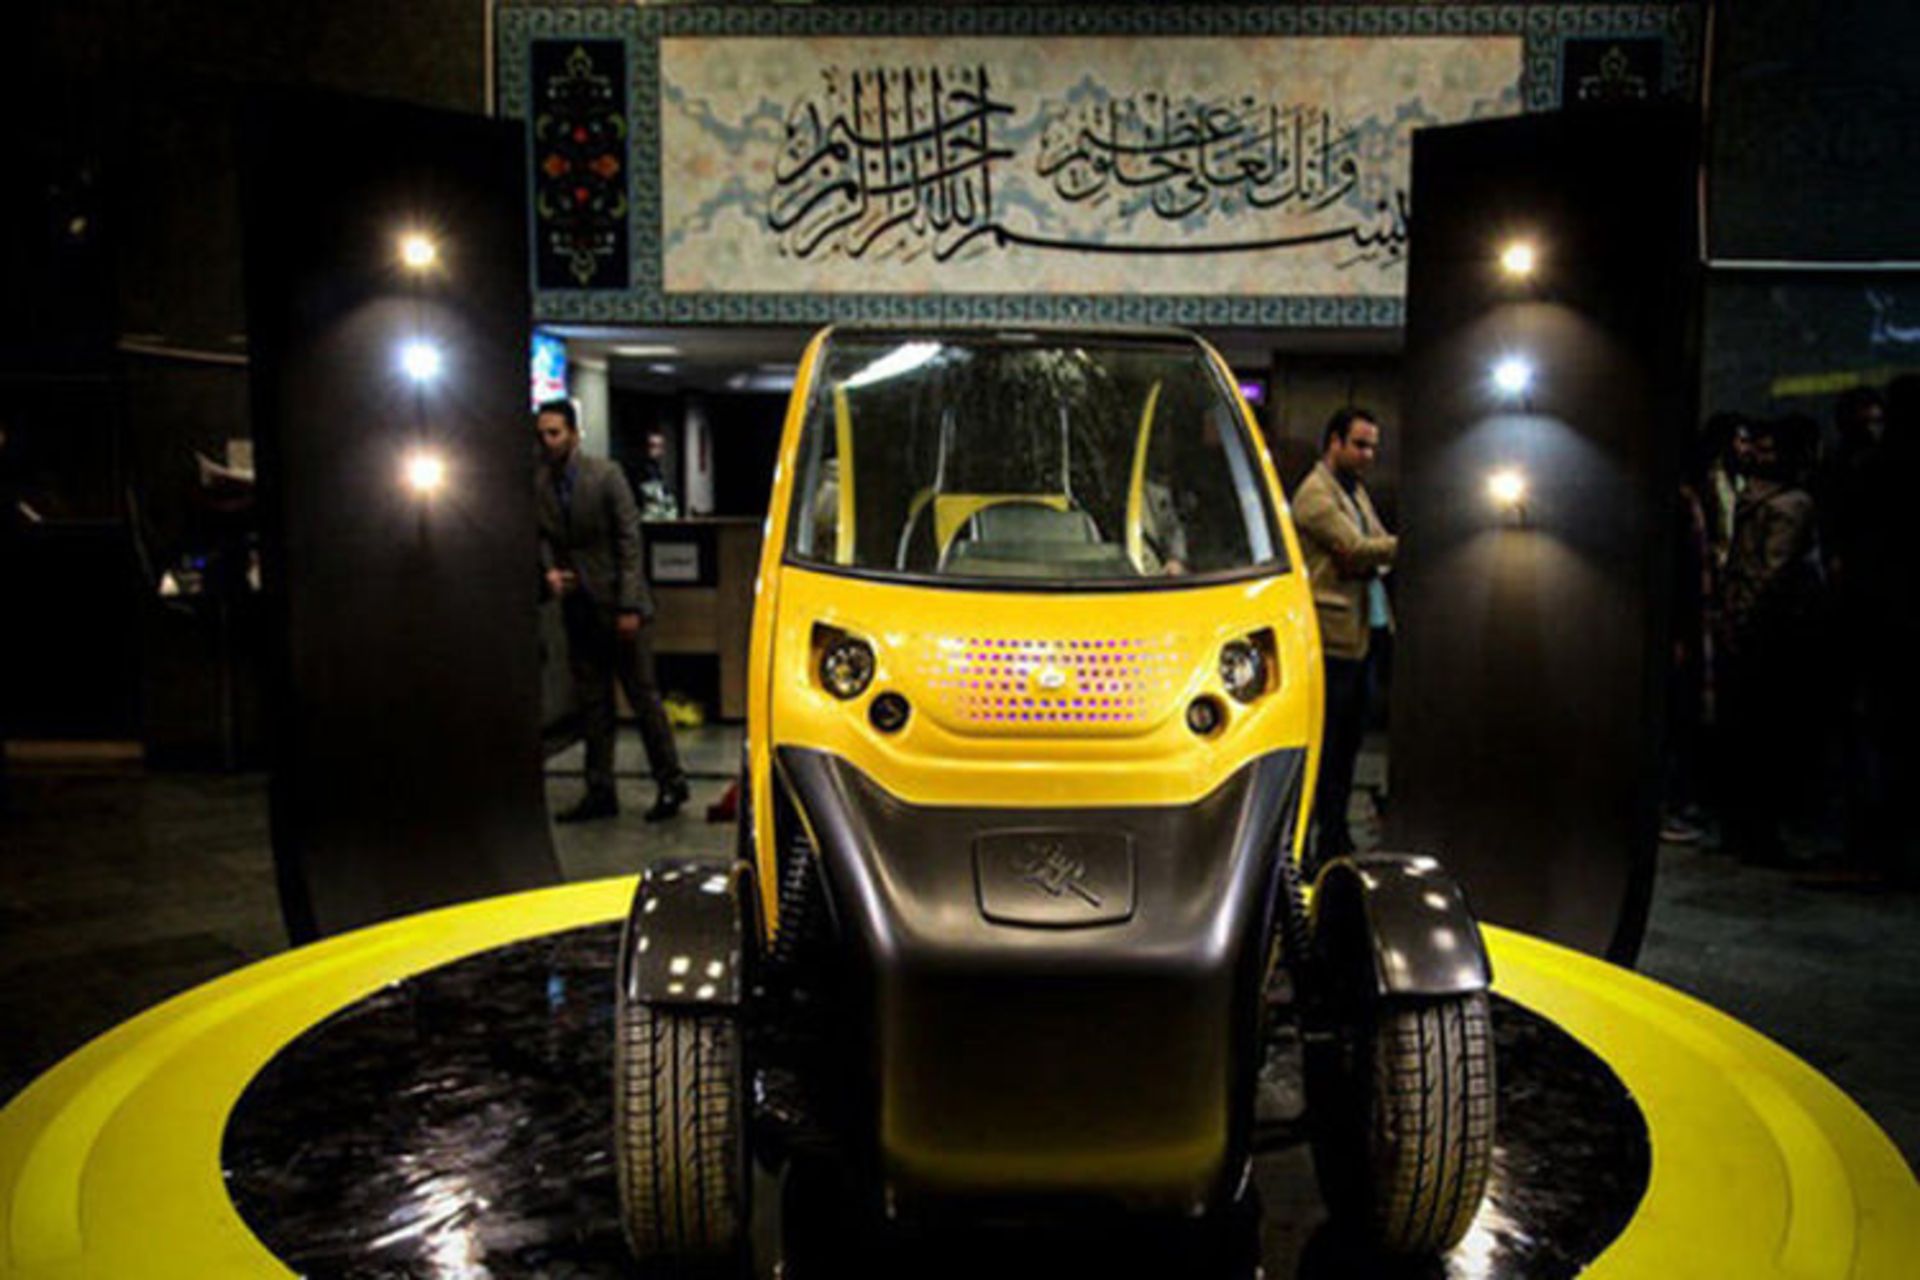 electric car / خودروی الکتریکی ایرانی